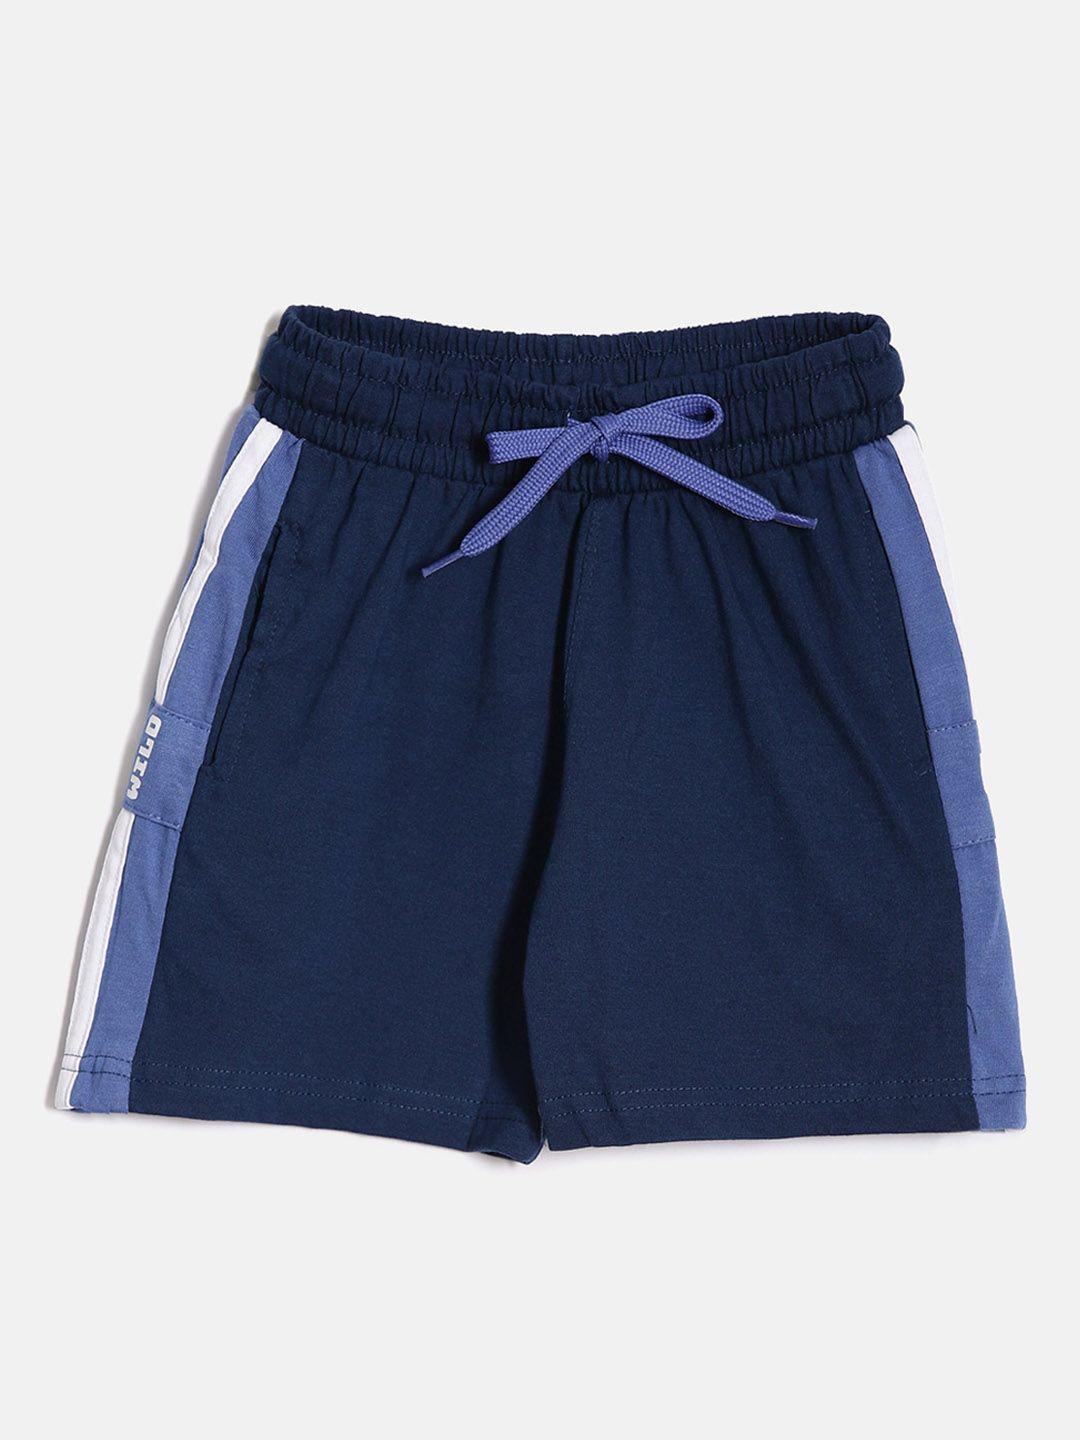 dixcy scott boys comfort fit mid-rise cotton shorts